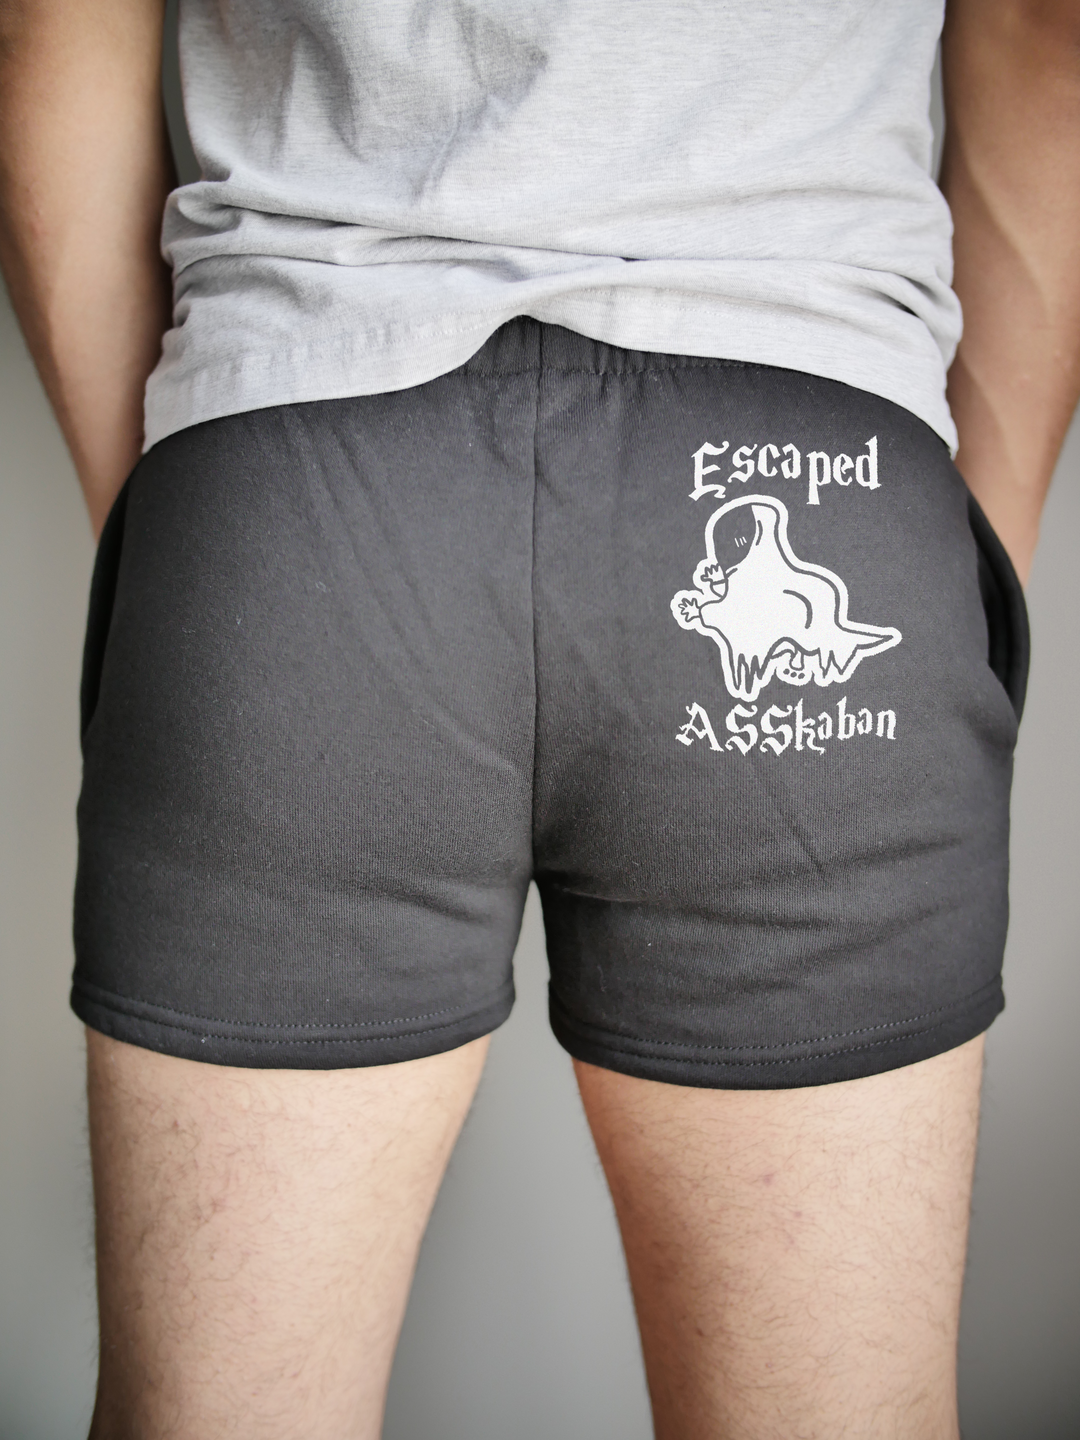 Escaped ASSkaban Men's Gym Shorts